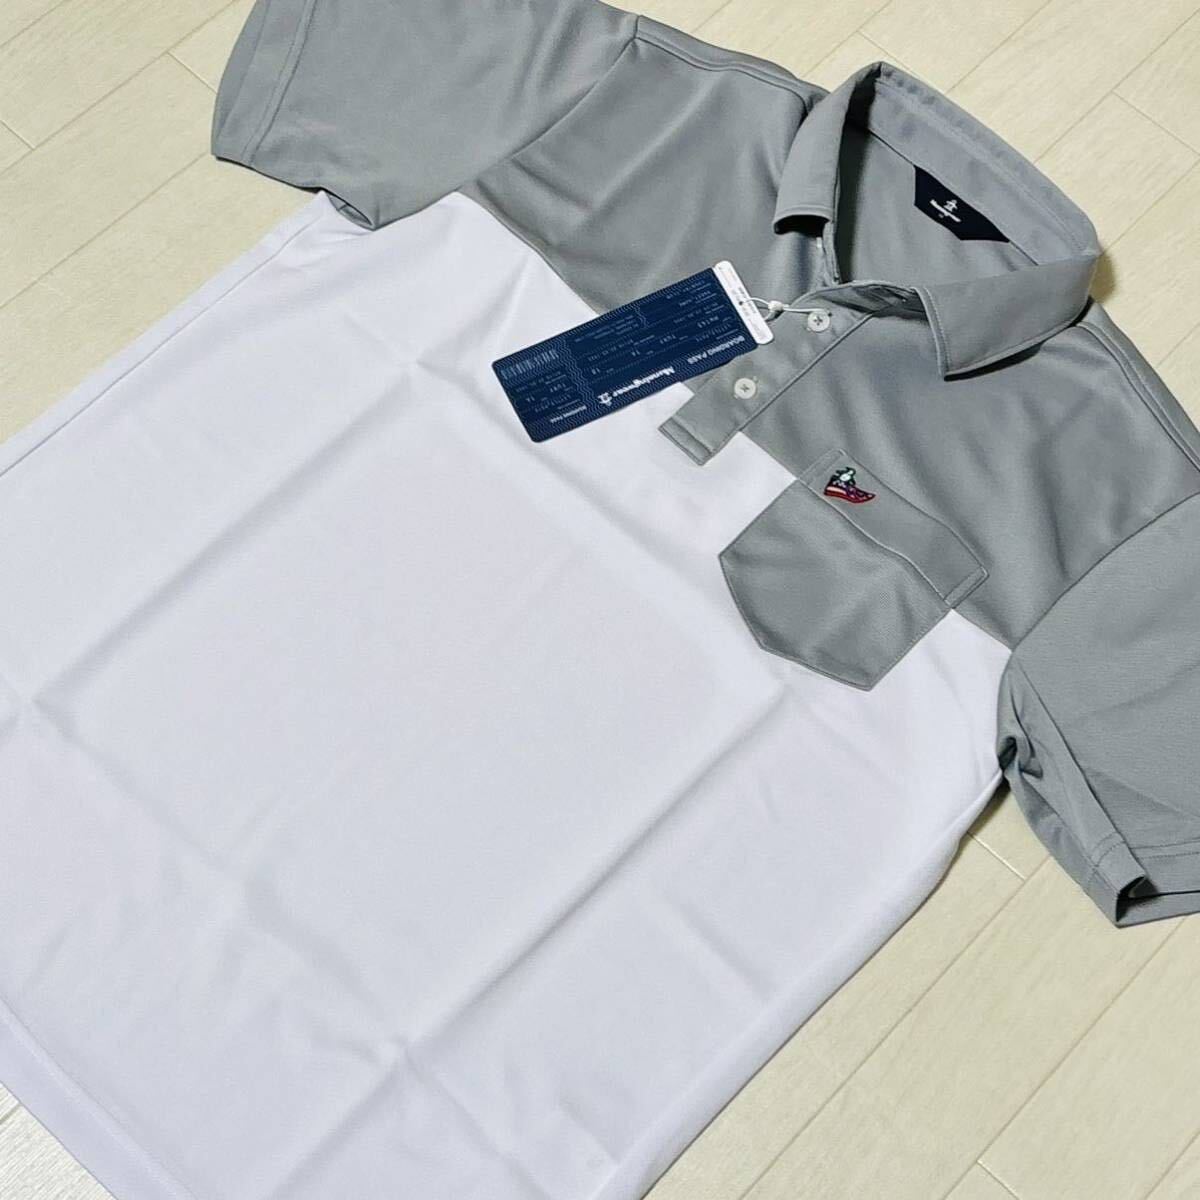  new goods * Munsingwear wear Munsingwear Golf wear switch design . sweat speed . polo-shirt with short sleeves * made in Japan * gray * size M* postage 185 jpy 